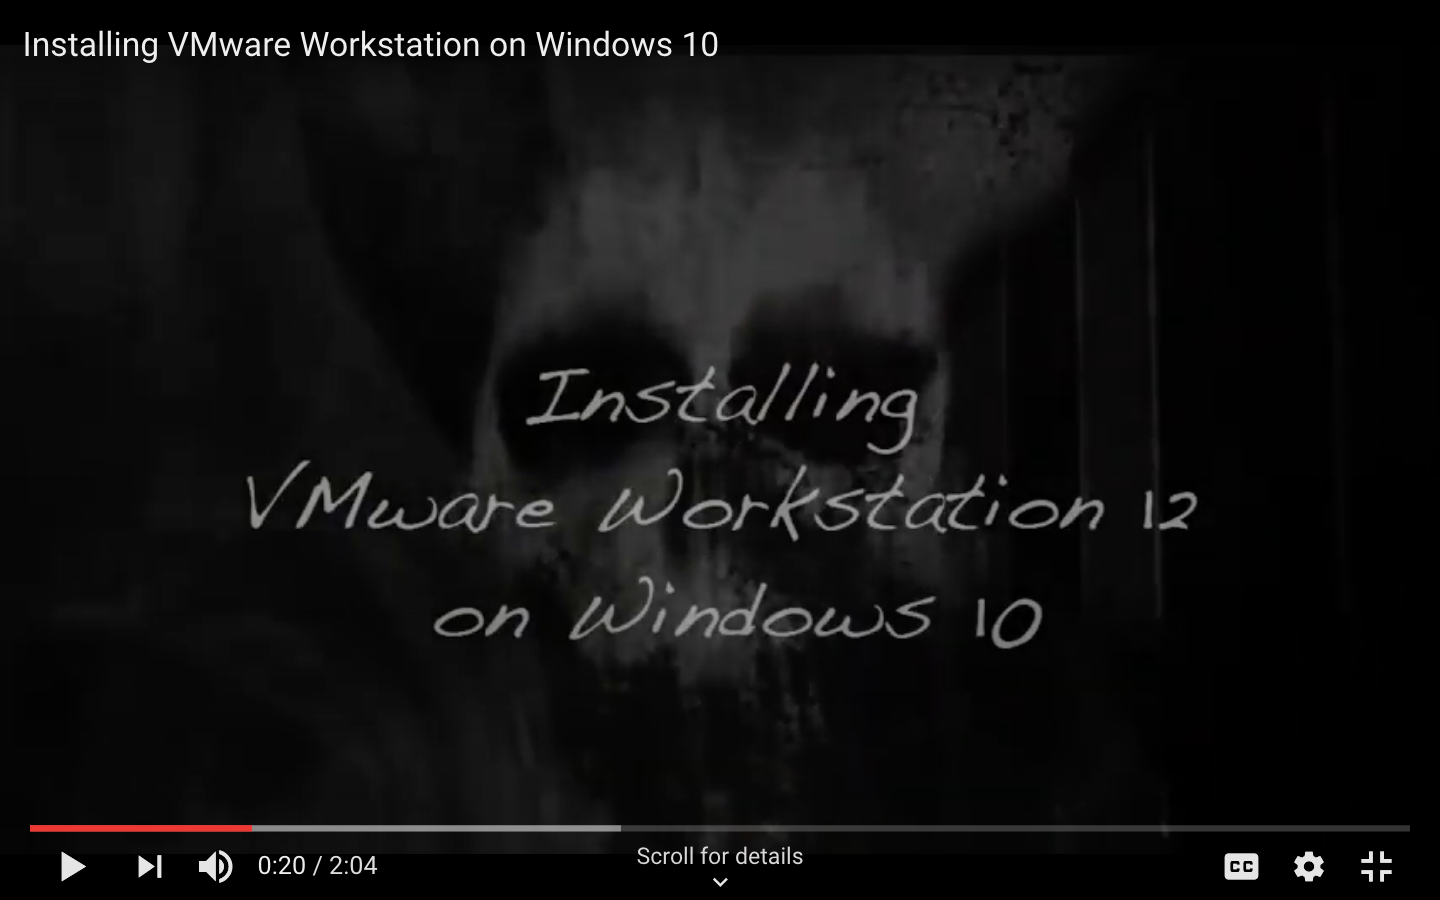 Installing VMware Workstation 14 Pro on Windows 10 Video https://youtu.be/1vziE9hYy1w